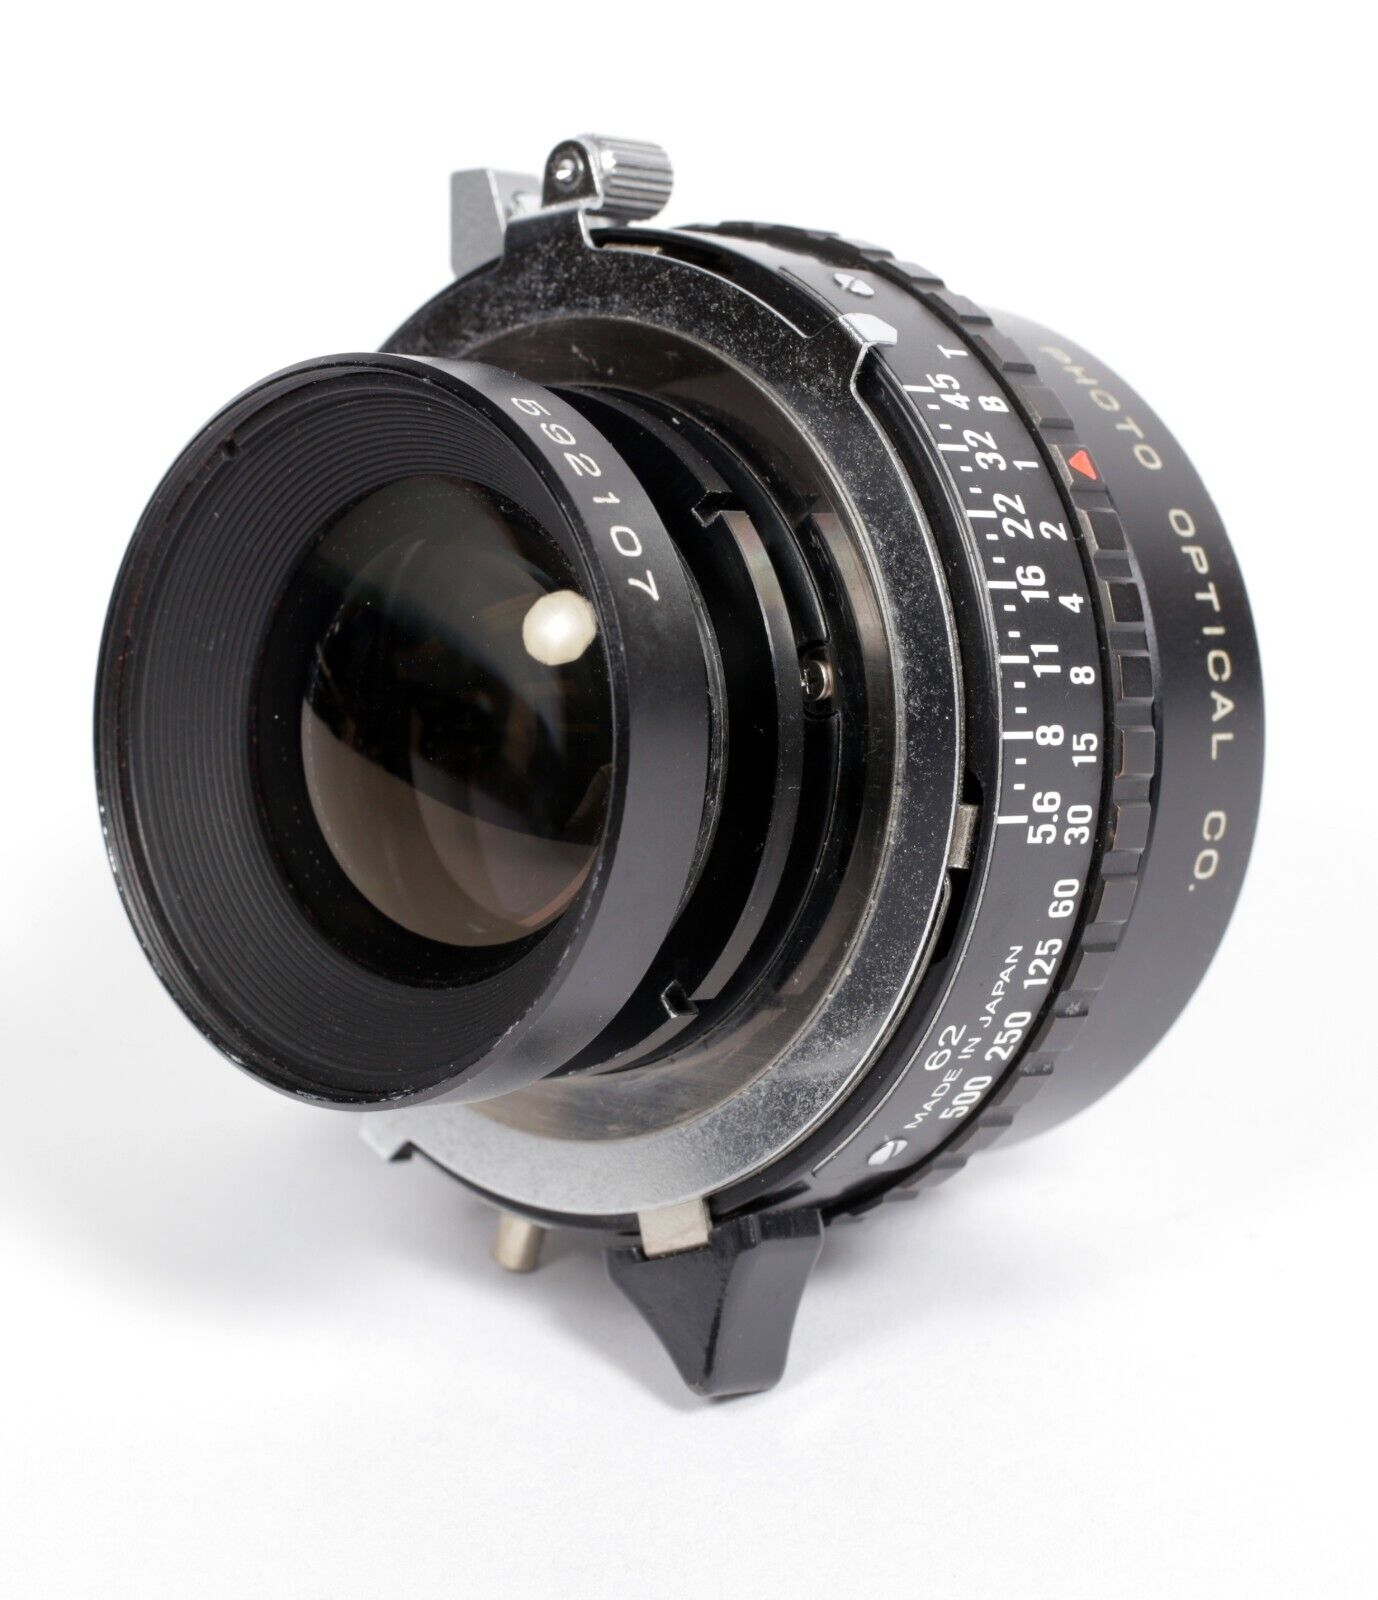 Fuji Fujinon W (black) 125mm F5.6 lens in Copal #0 shutter #107